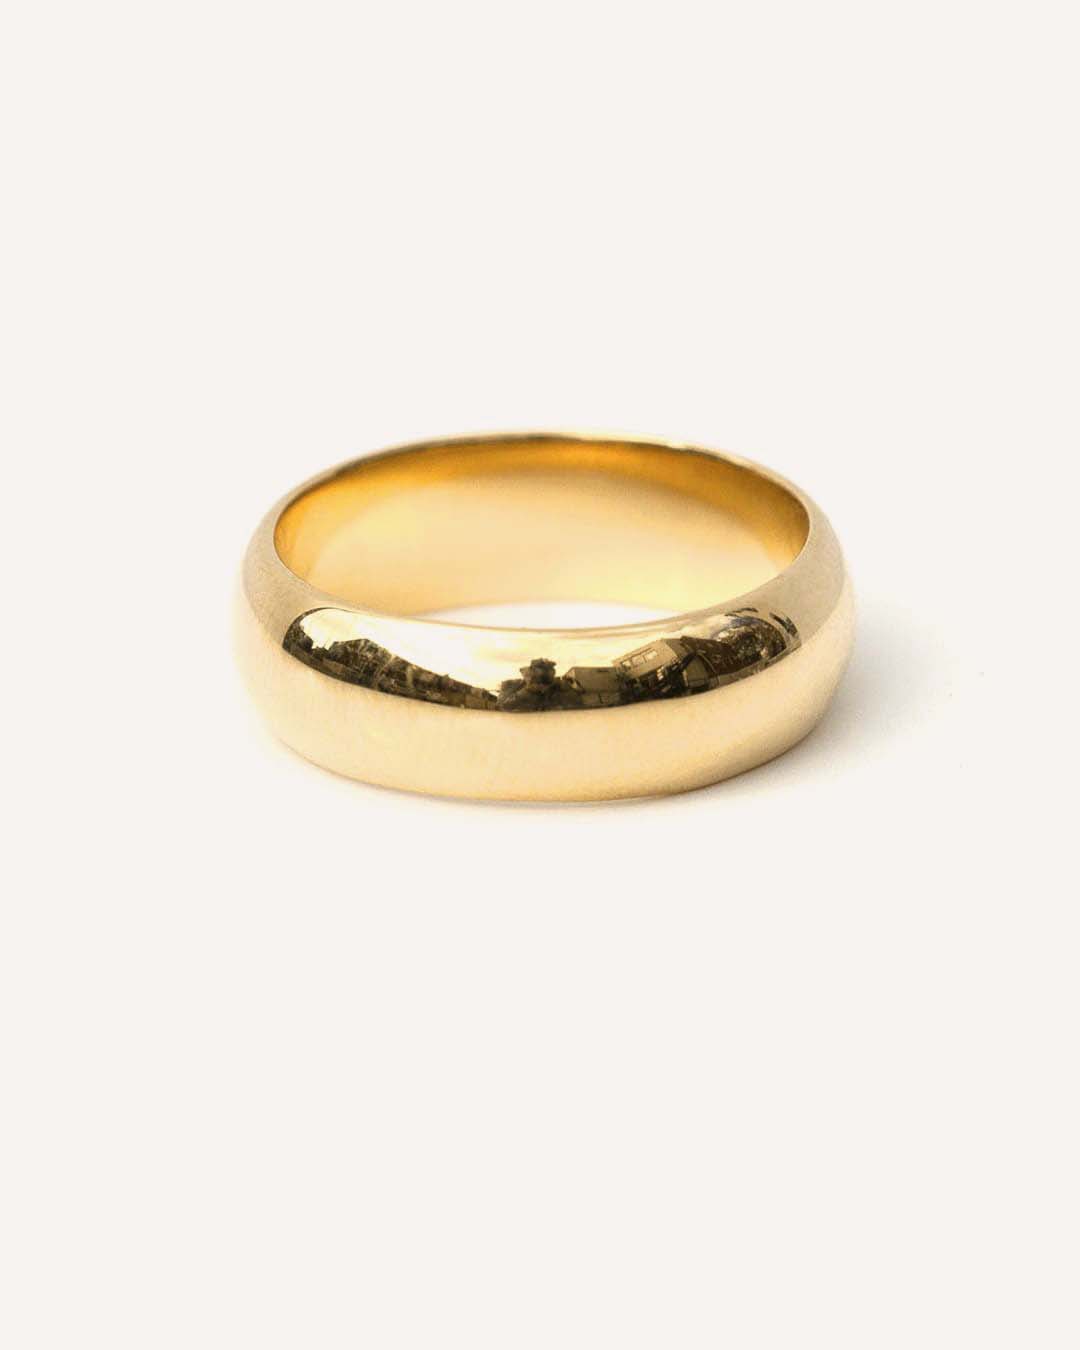 Jordan Solid Gold Ring